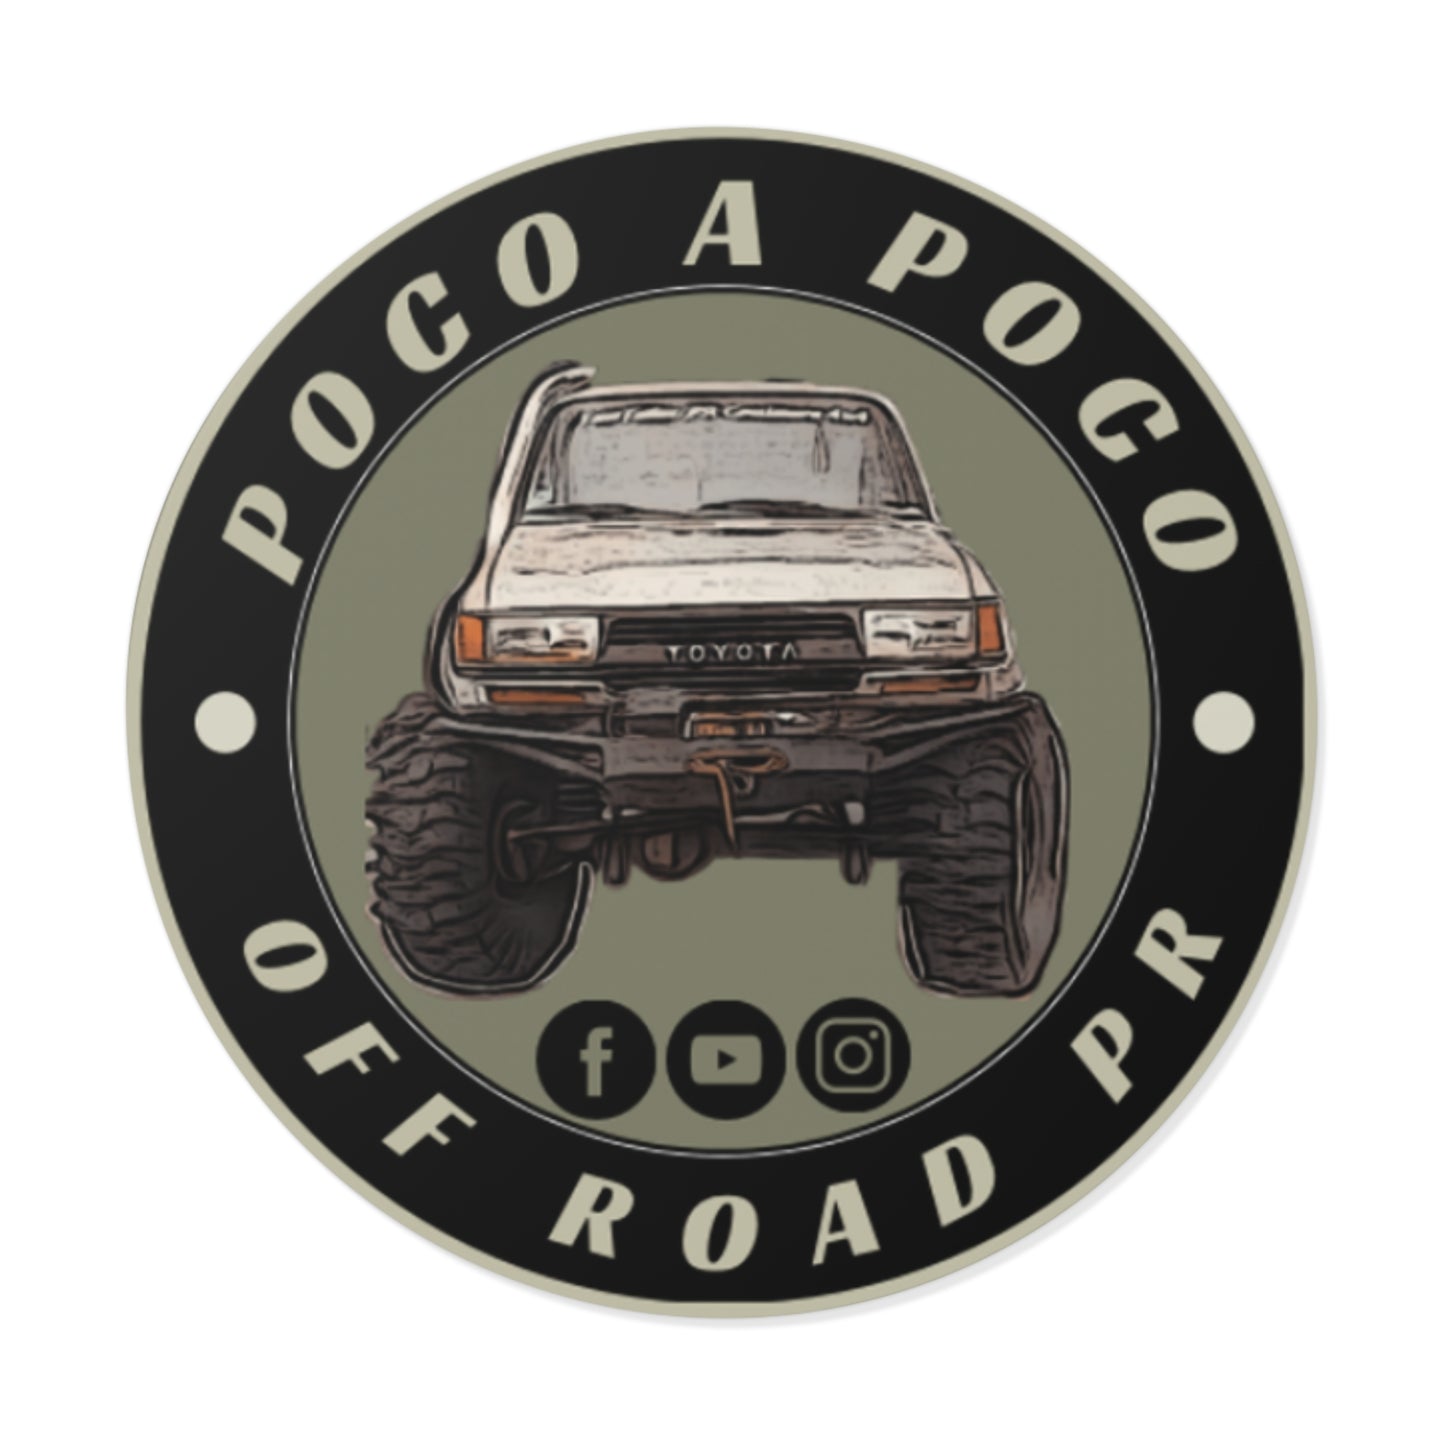 Poco A Poco Round Vinyl Sticker